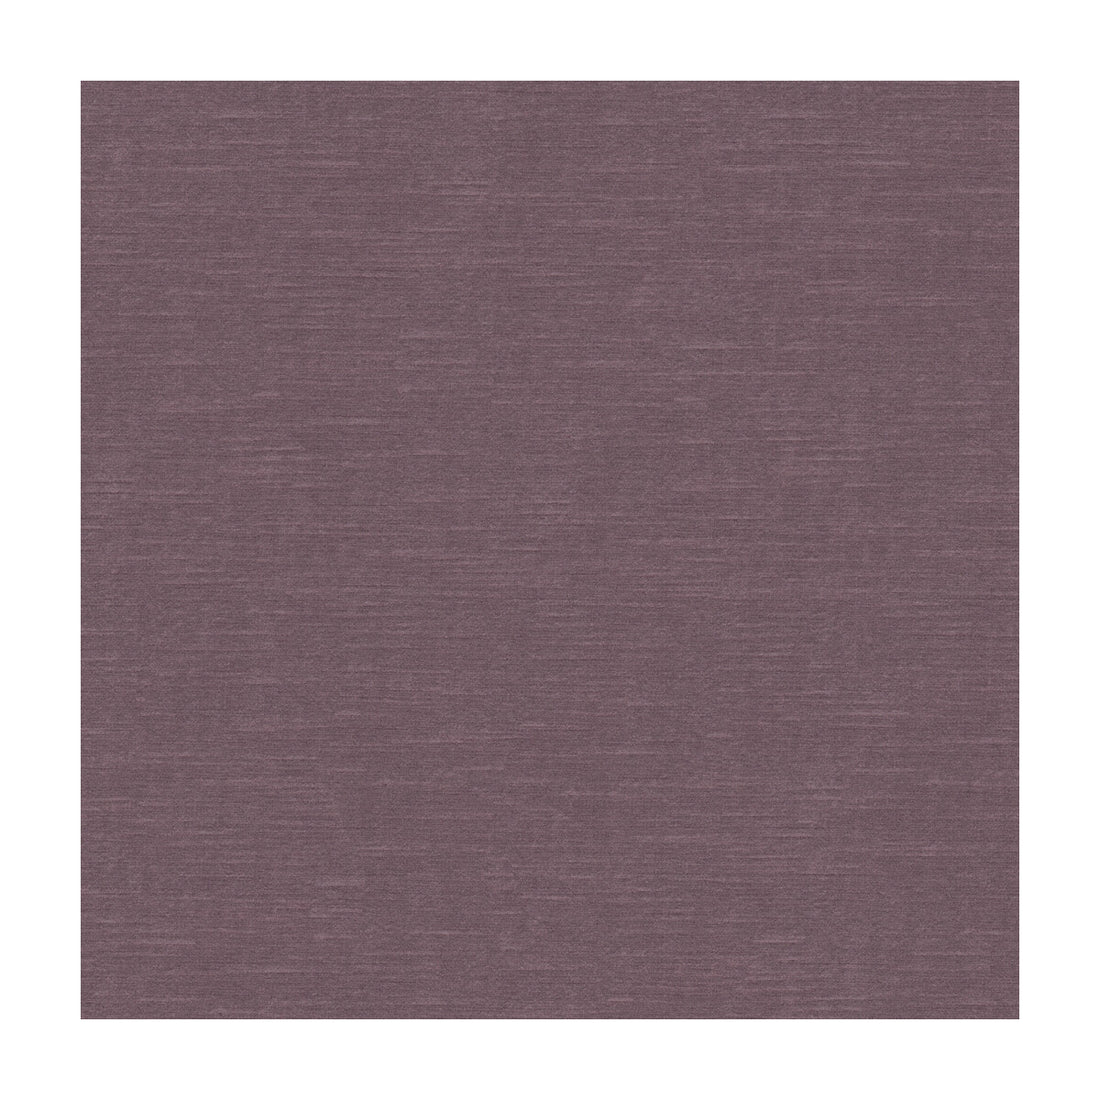 Venetian fabric in violet color - pattern 31326.110.0 - by Kravet Design